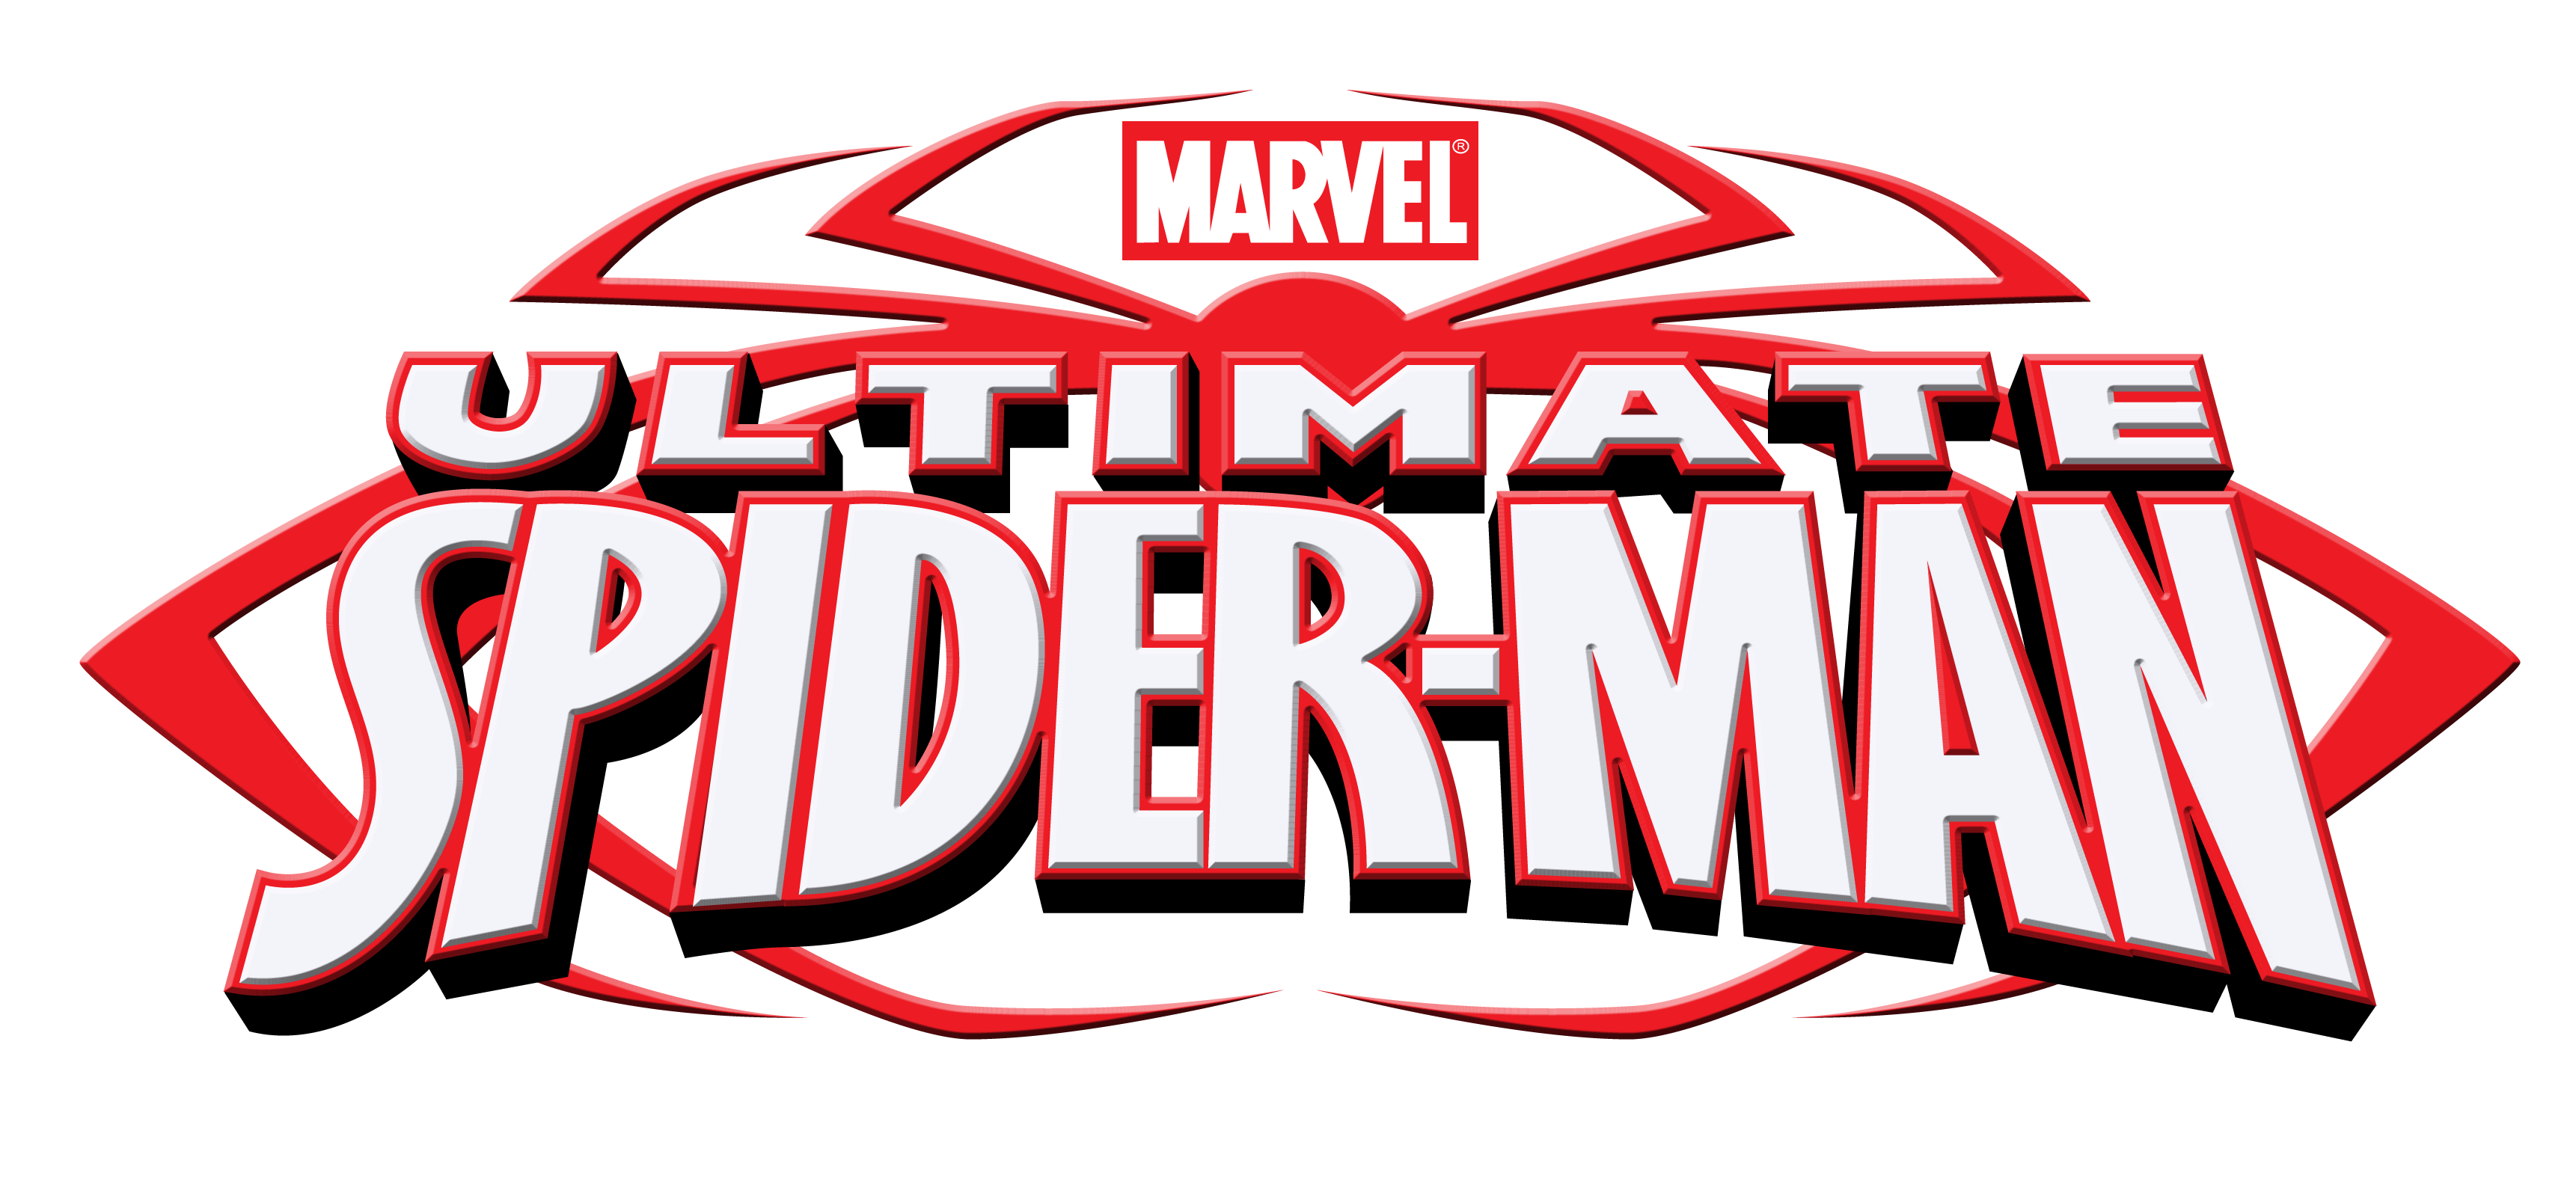 Logo Ultimate Spider Man Tv Show 3443x1607